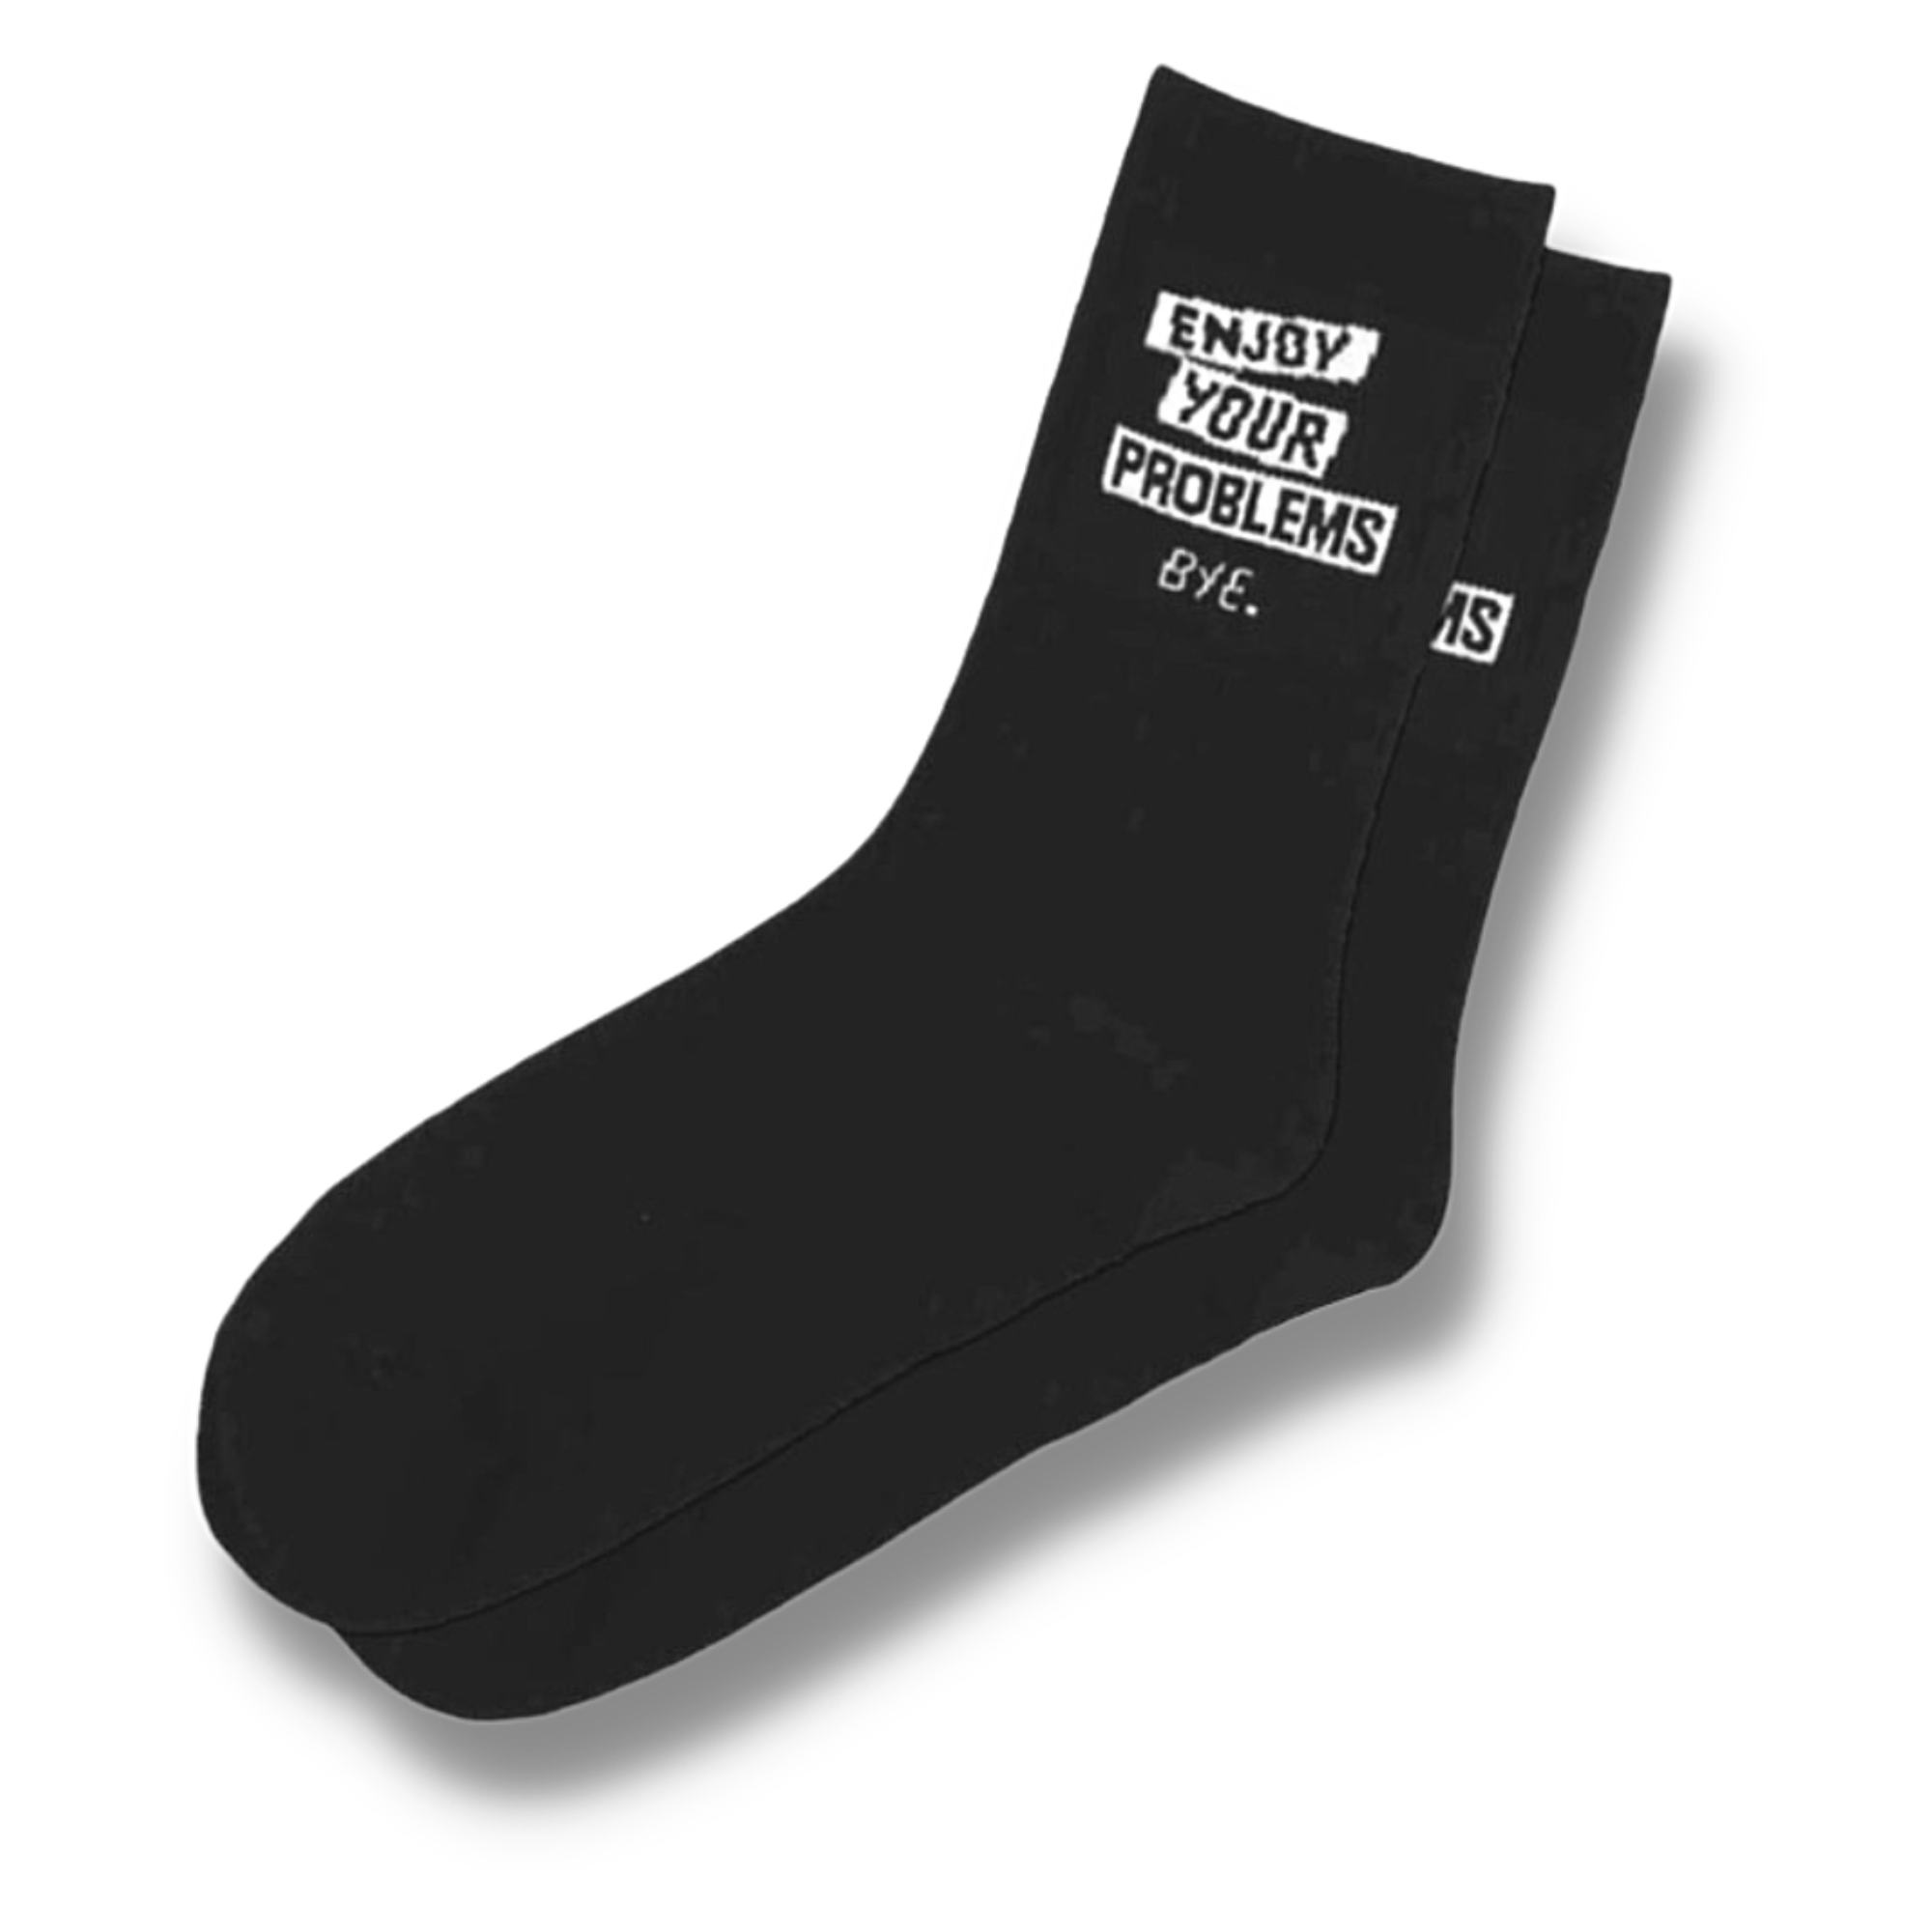 Problematic Men's Socks (Size 6-10)